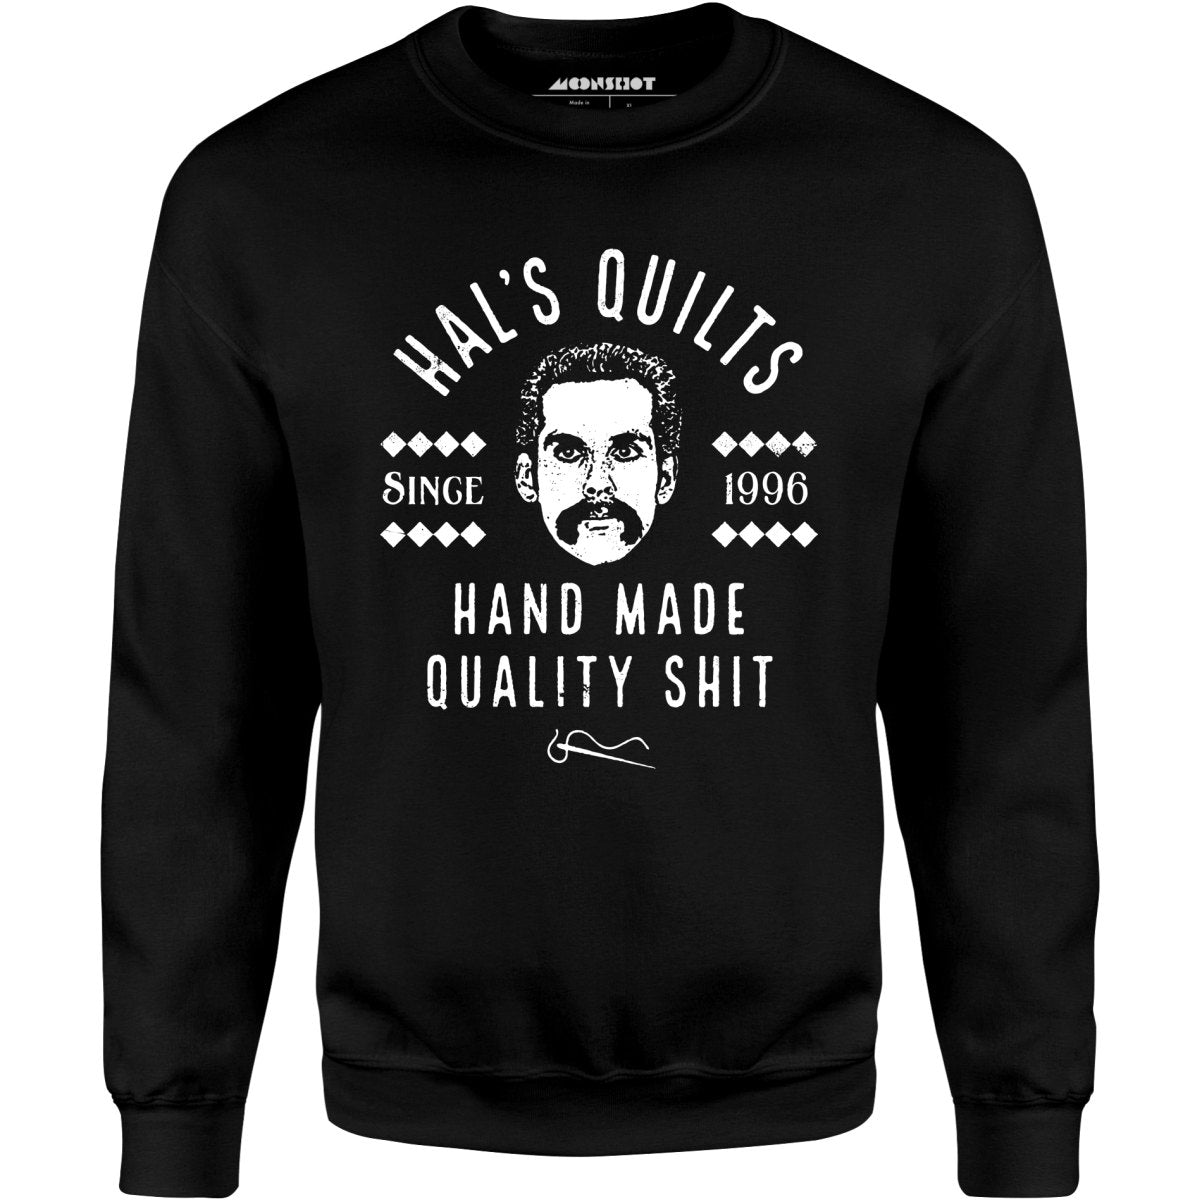 Hal's Quilts - Unisex Sweatshirt